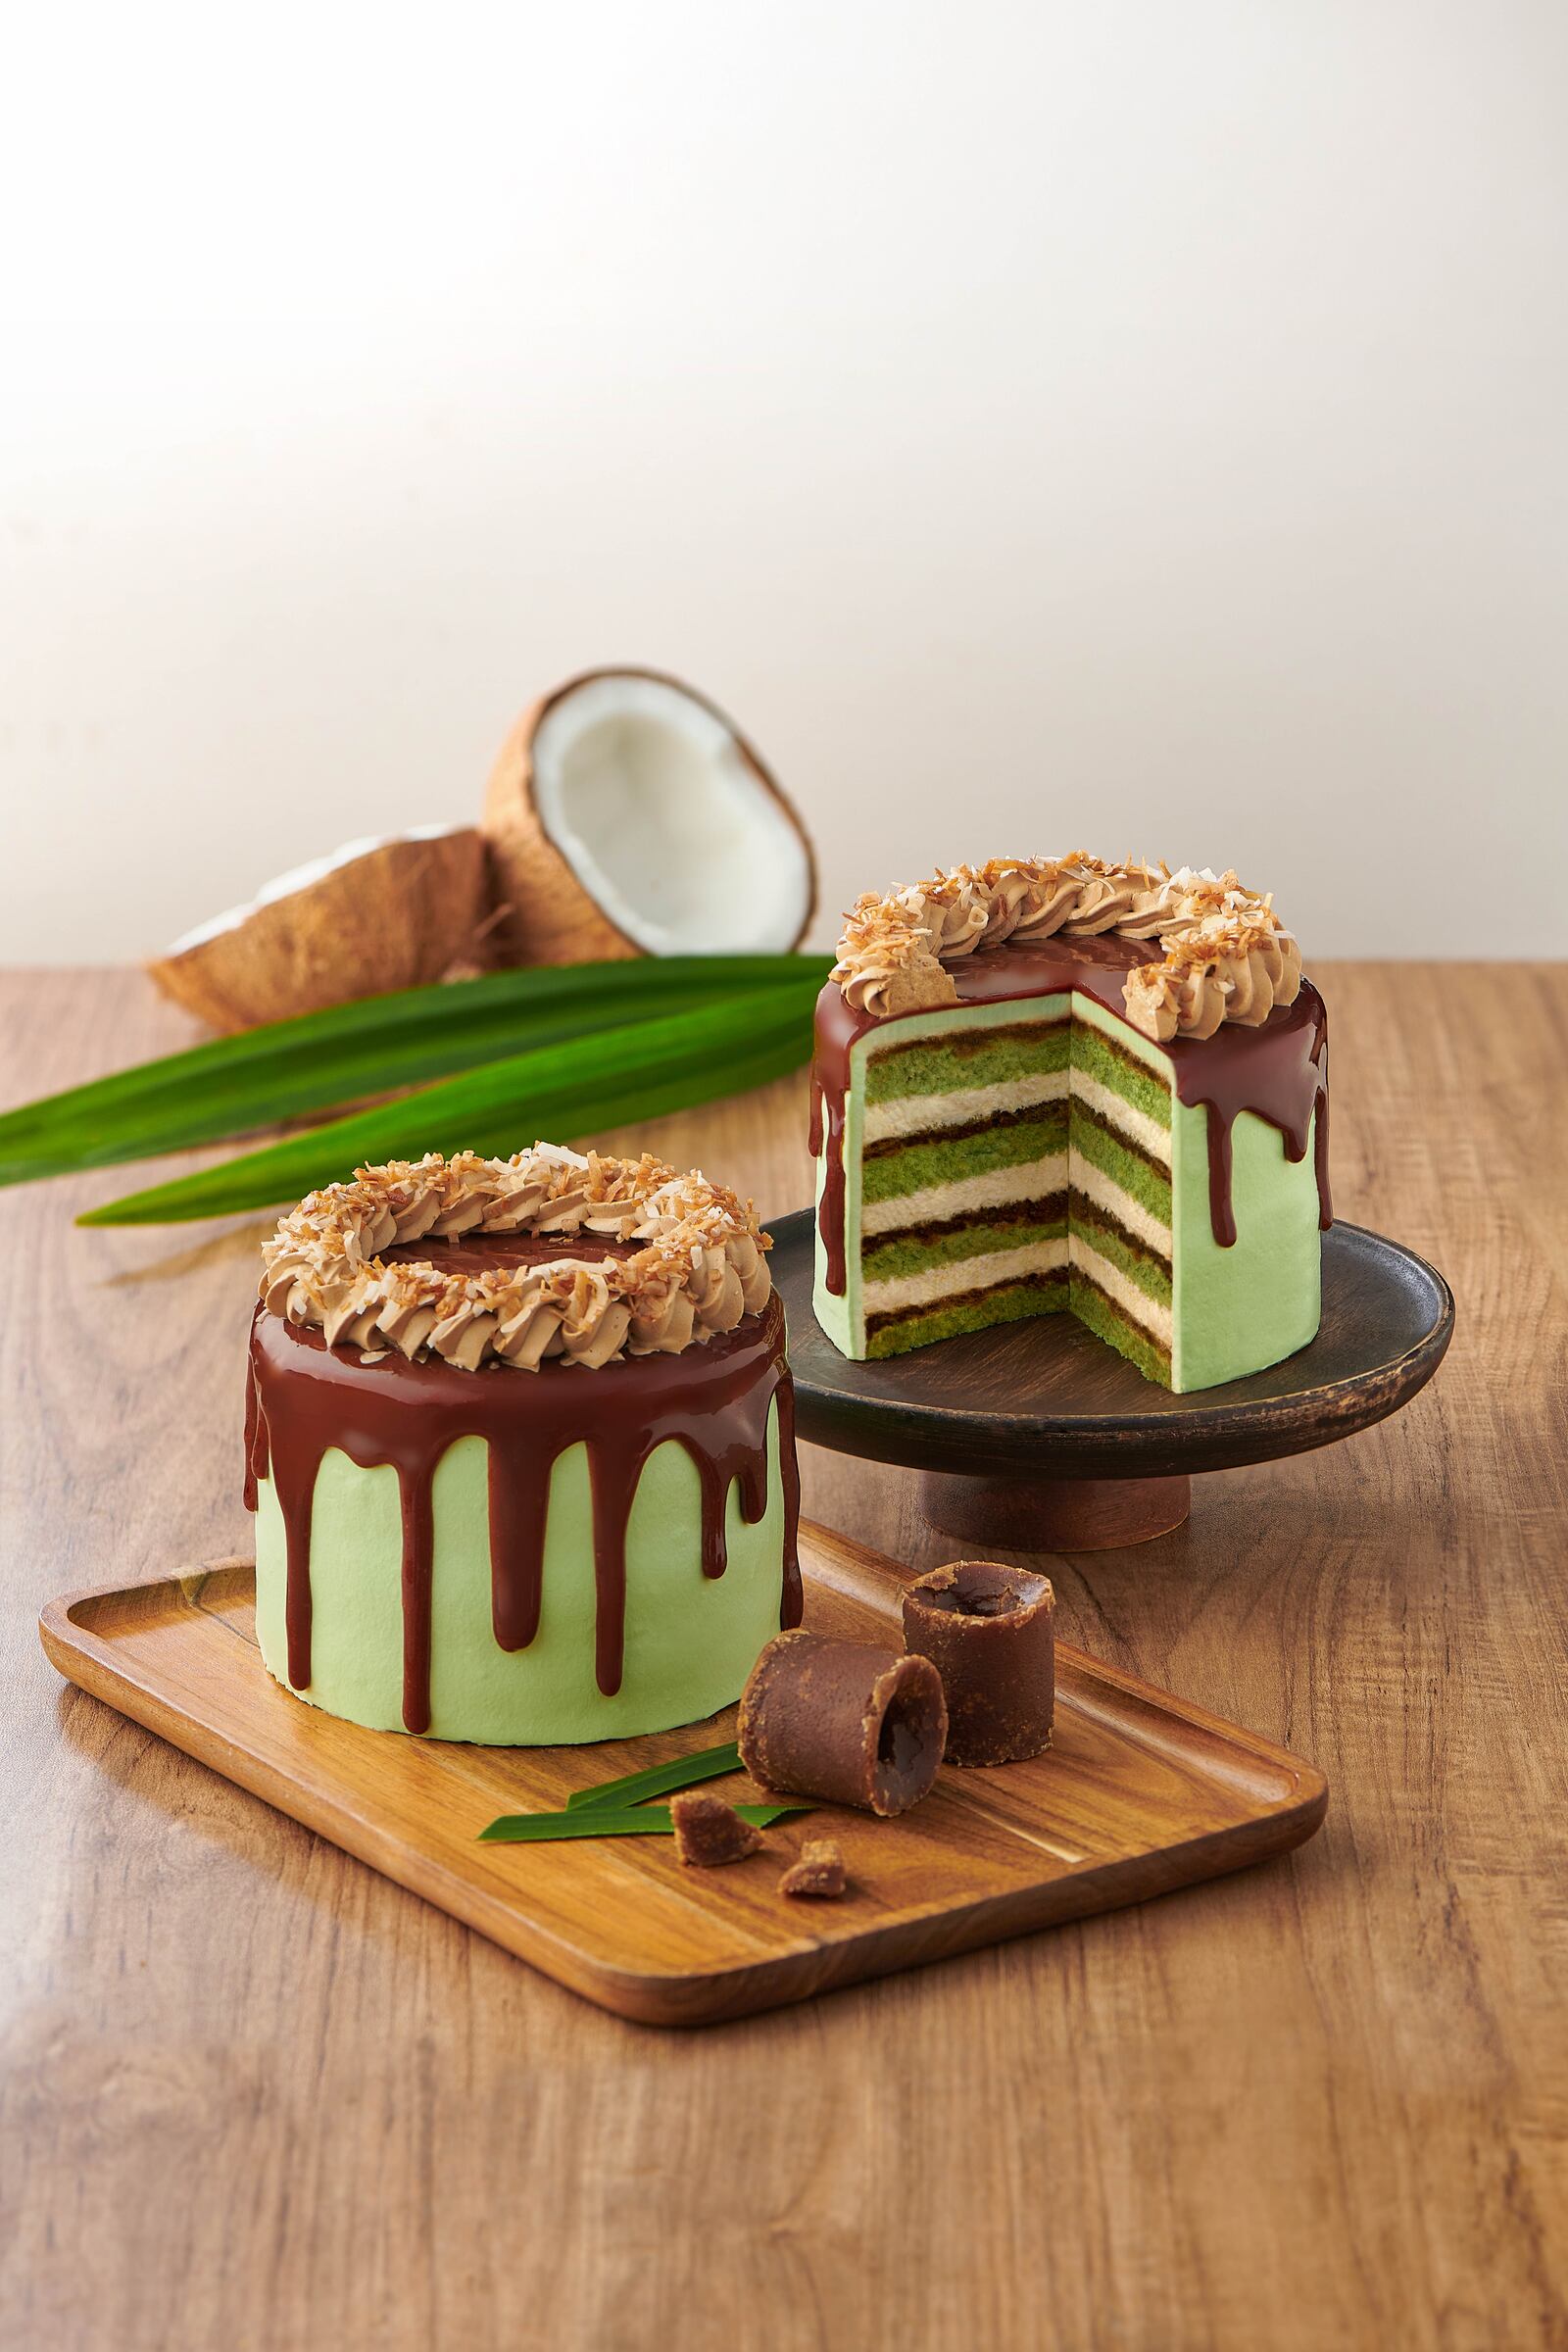 Baking Taitai 烘焙太太: Soft & Fluffy Banana Cake 柔软蓬松香蕉蛋糕（中英食谱）